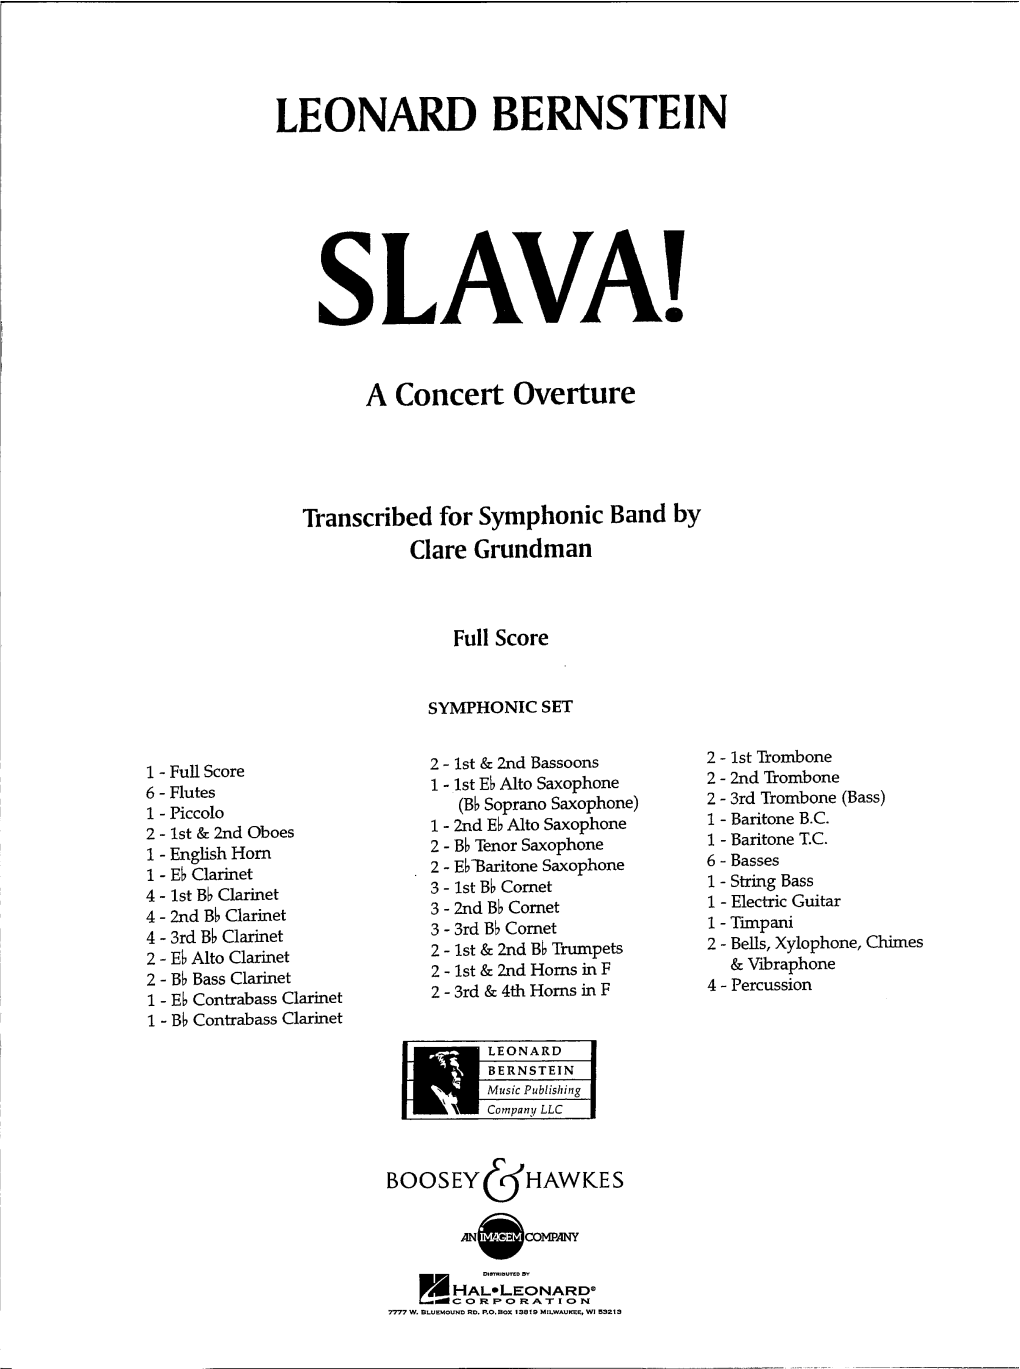 LEONARD BERNSTEIN SLAVA! a Concert Overture